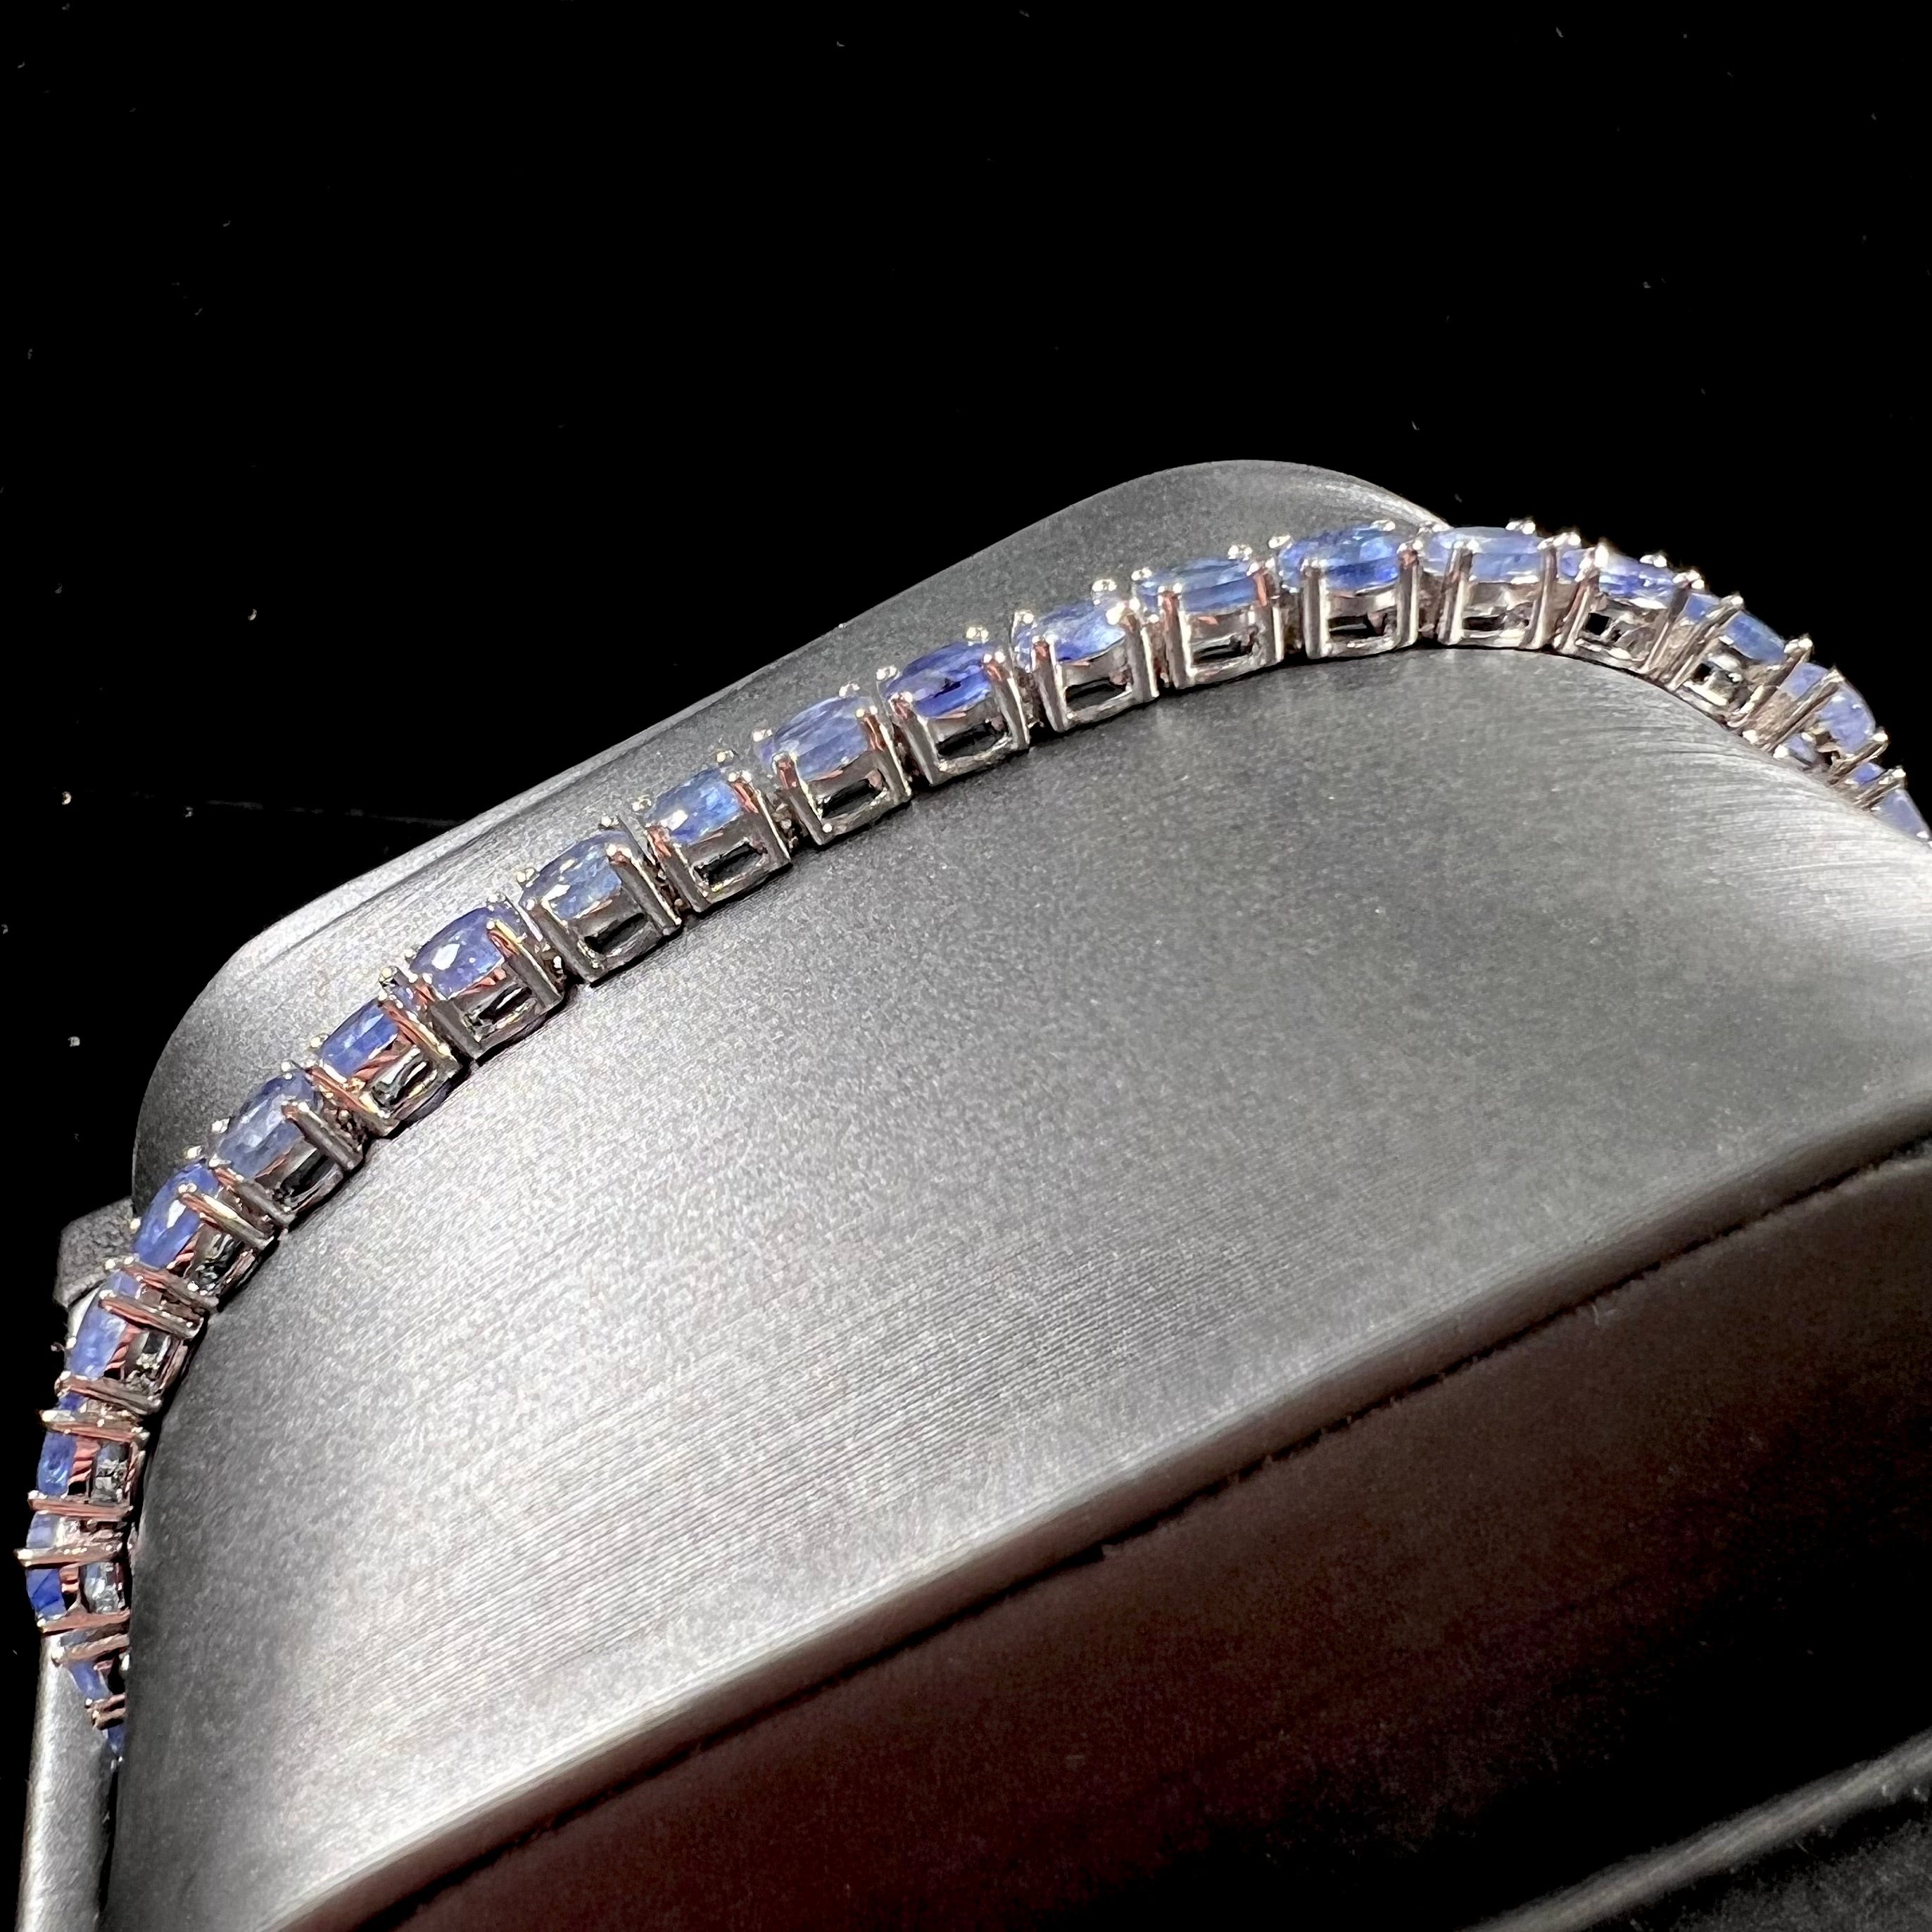 Buy Silver Bracelets & Bangles for Women by Ornate Jewels Online | Ajio.com